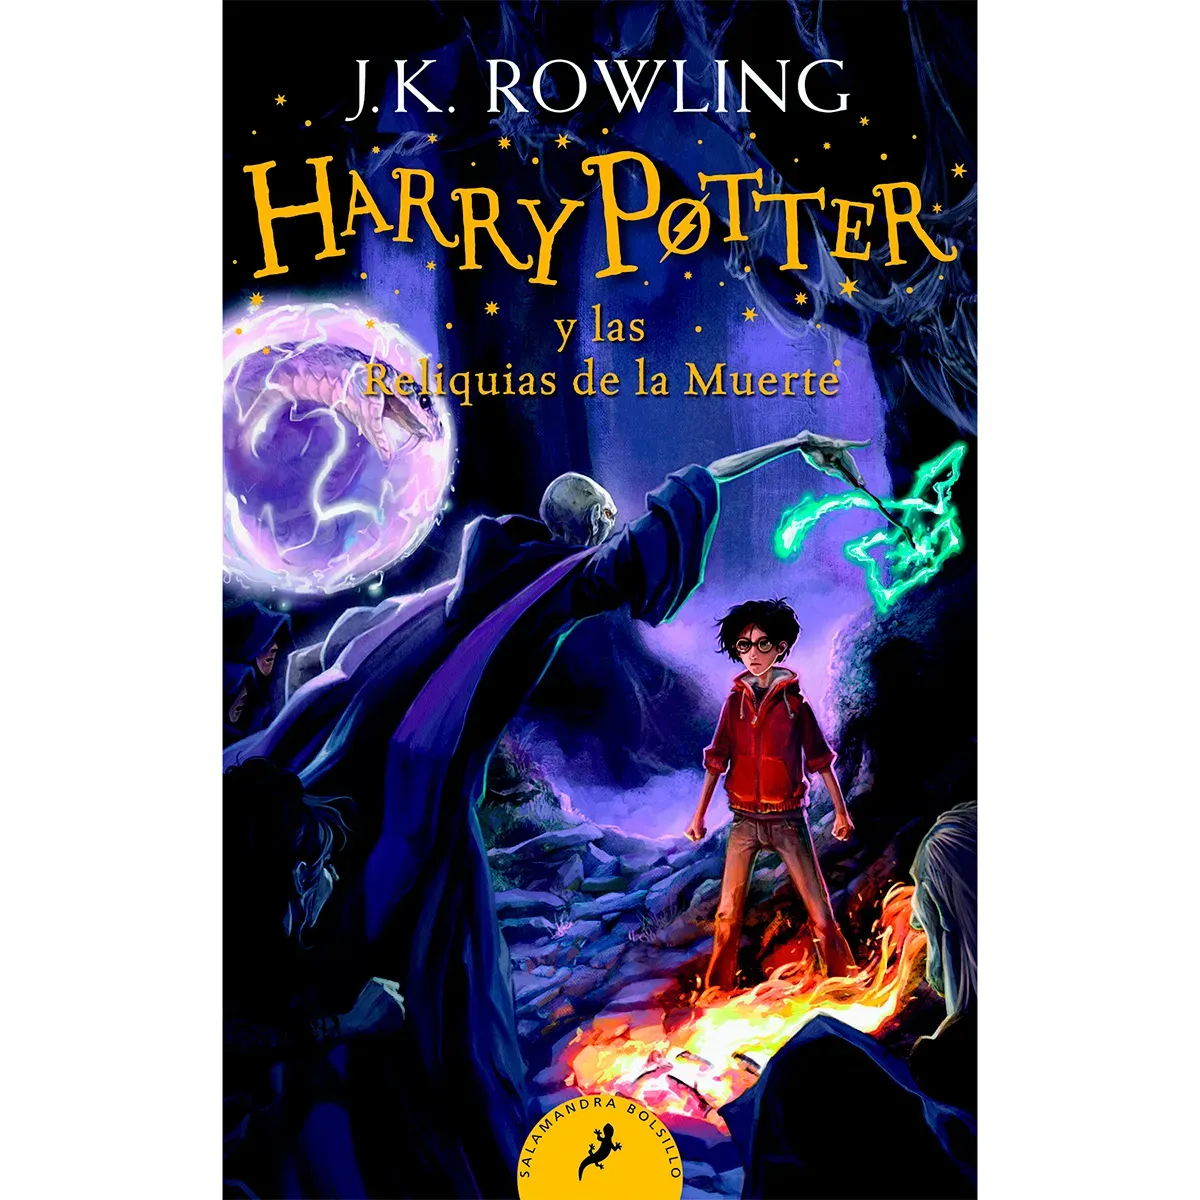 Harry Potter 7 Y Las Reliquias De La Muerte. J. K. Rowling